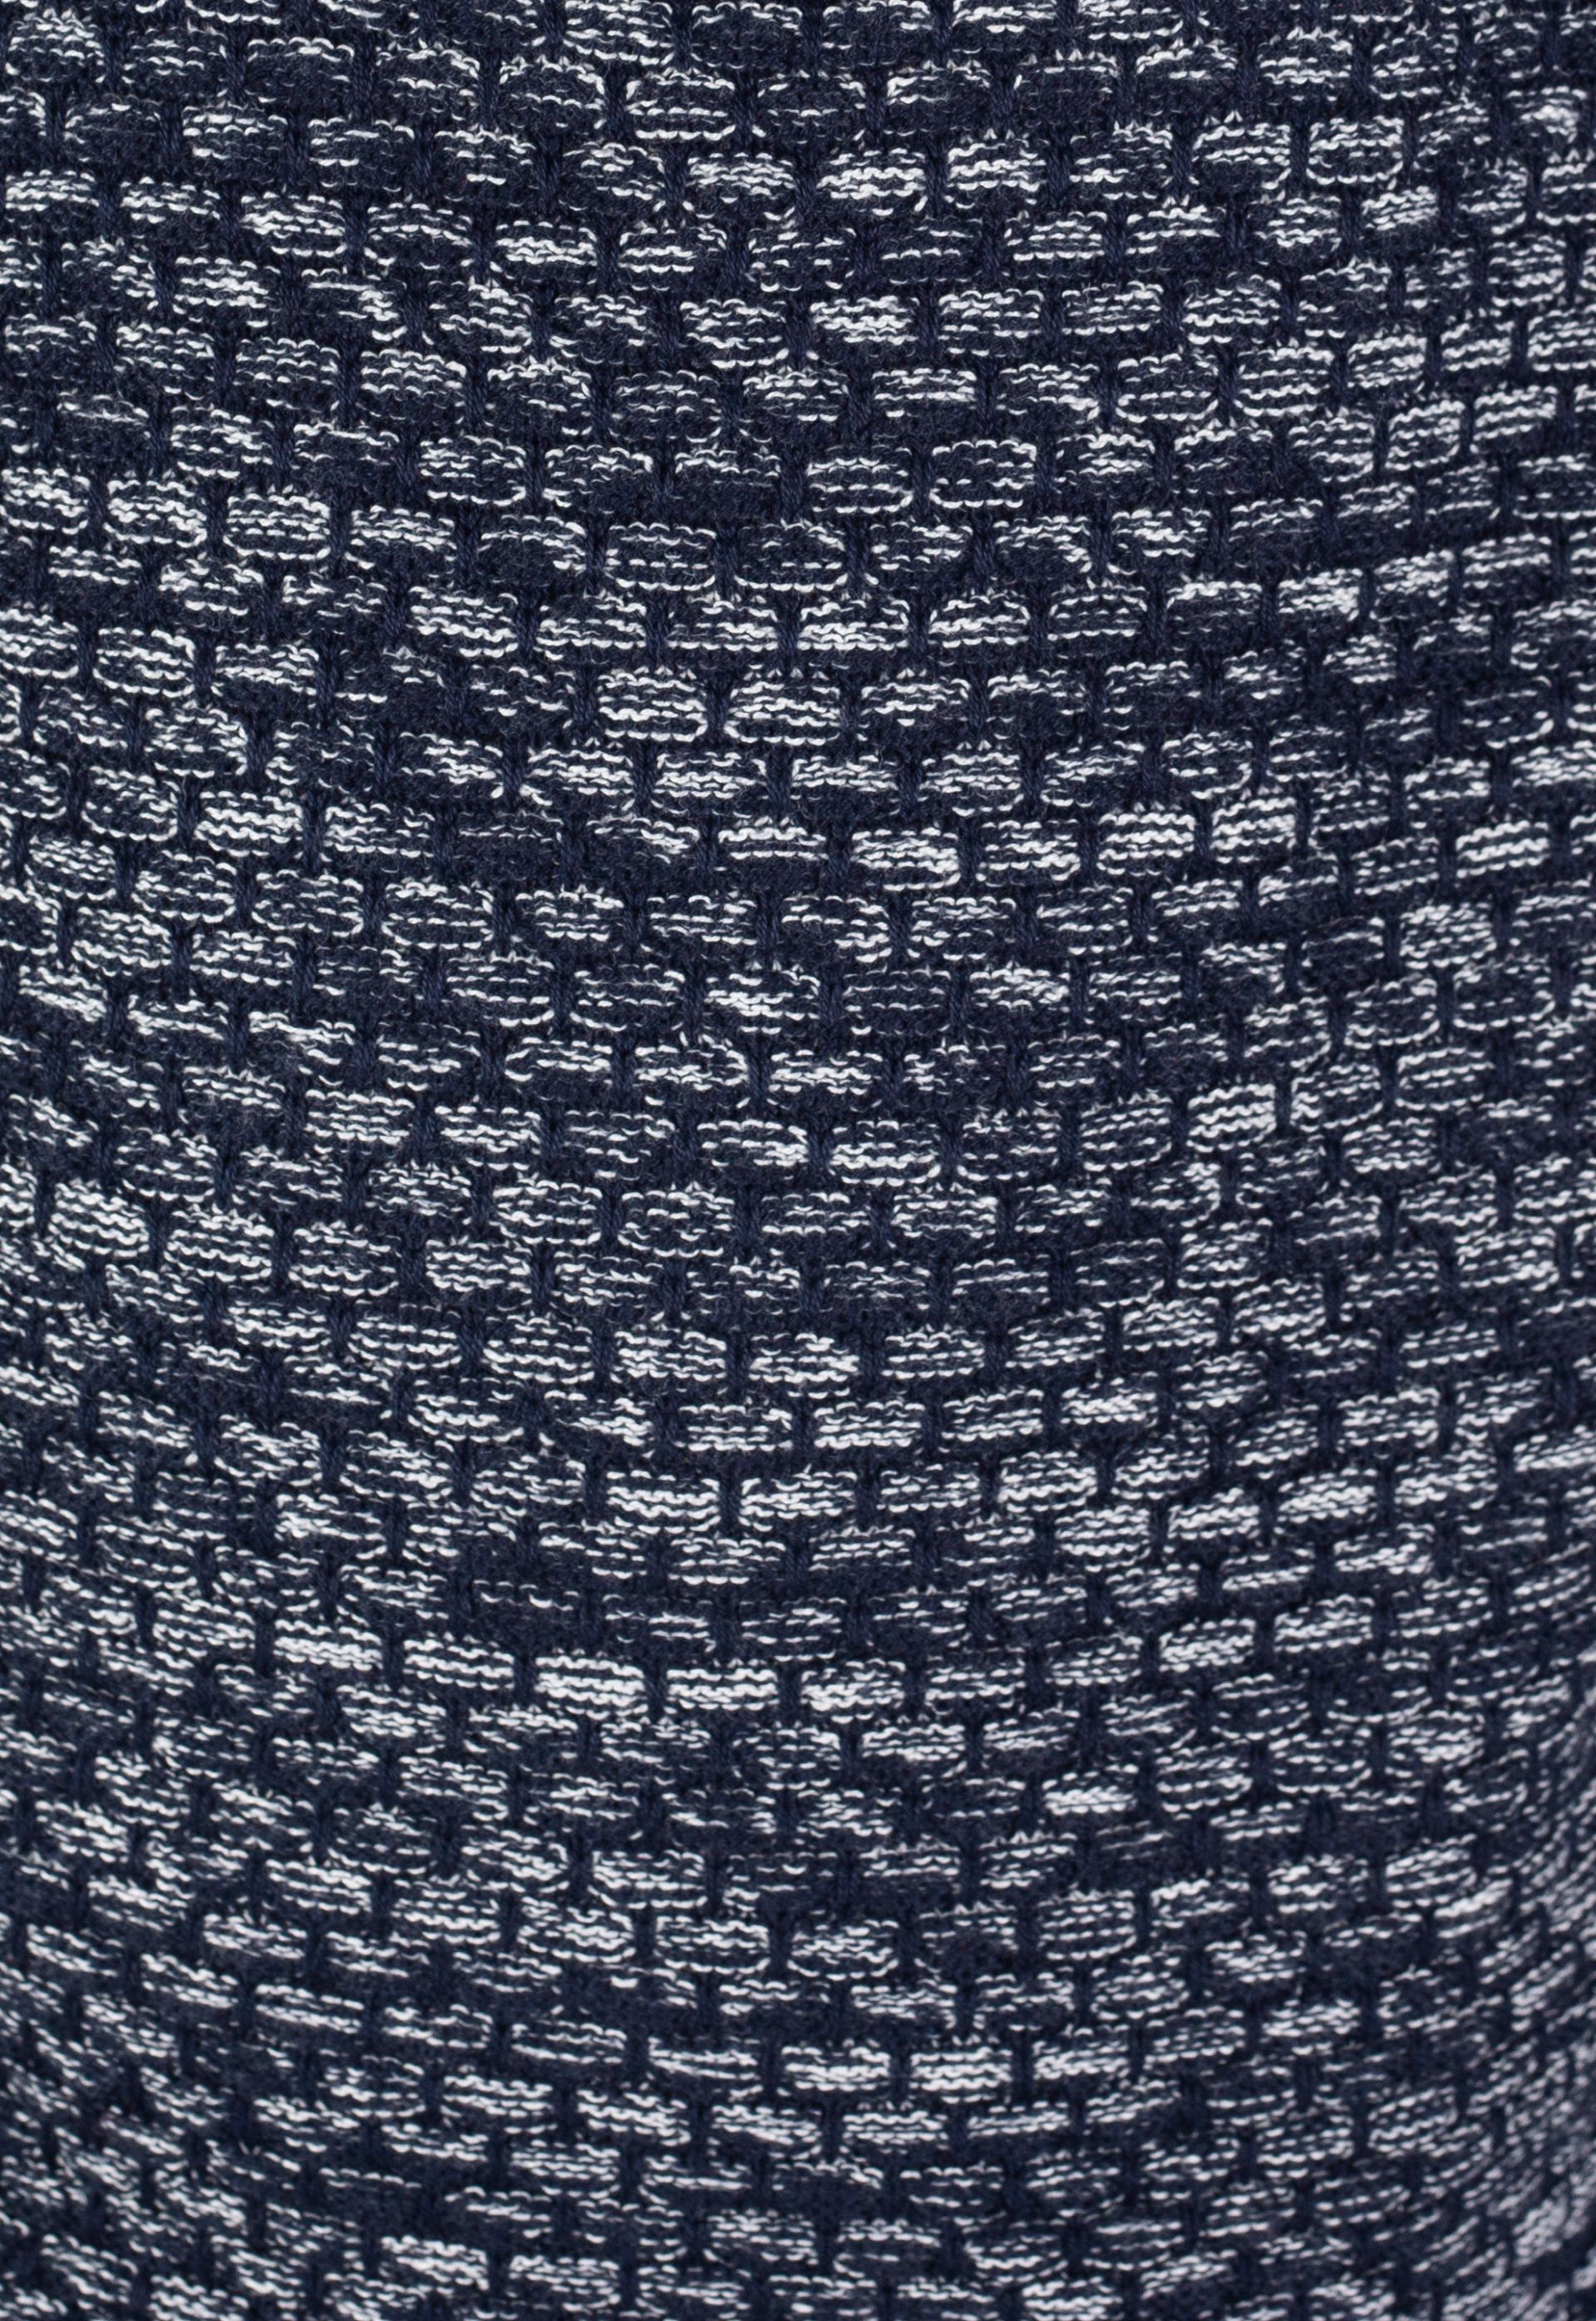 Sweater BLUE SEVEN 376405-598